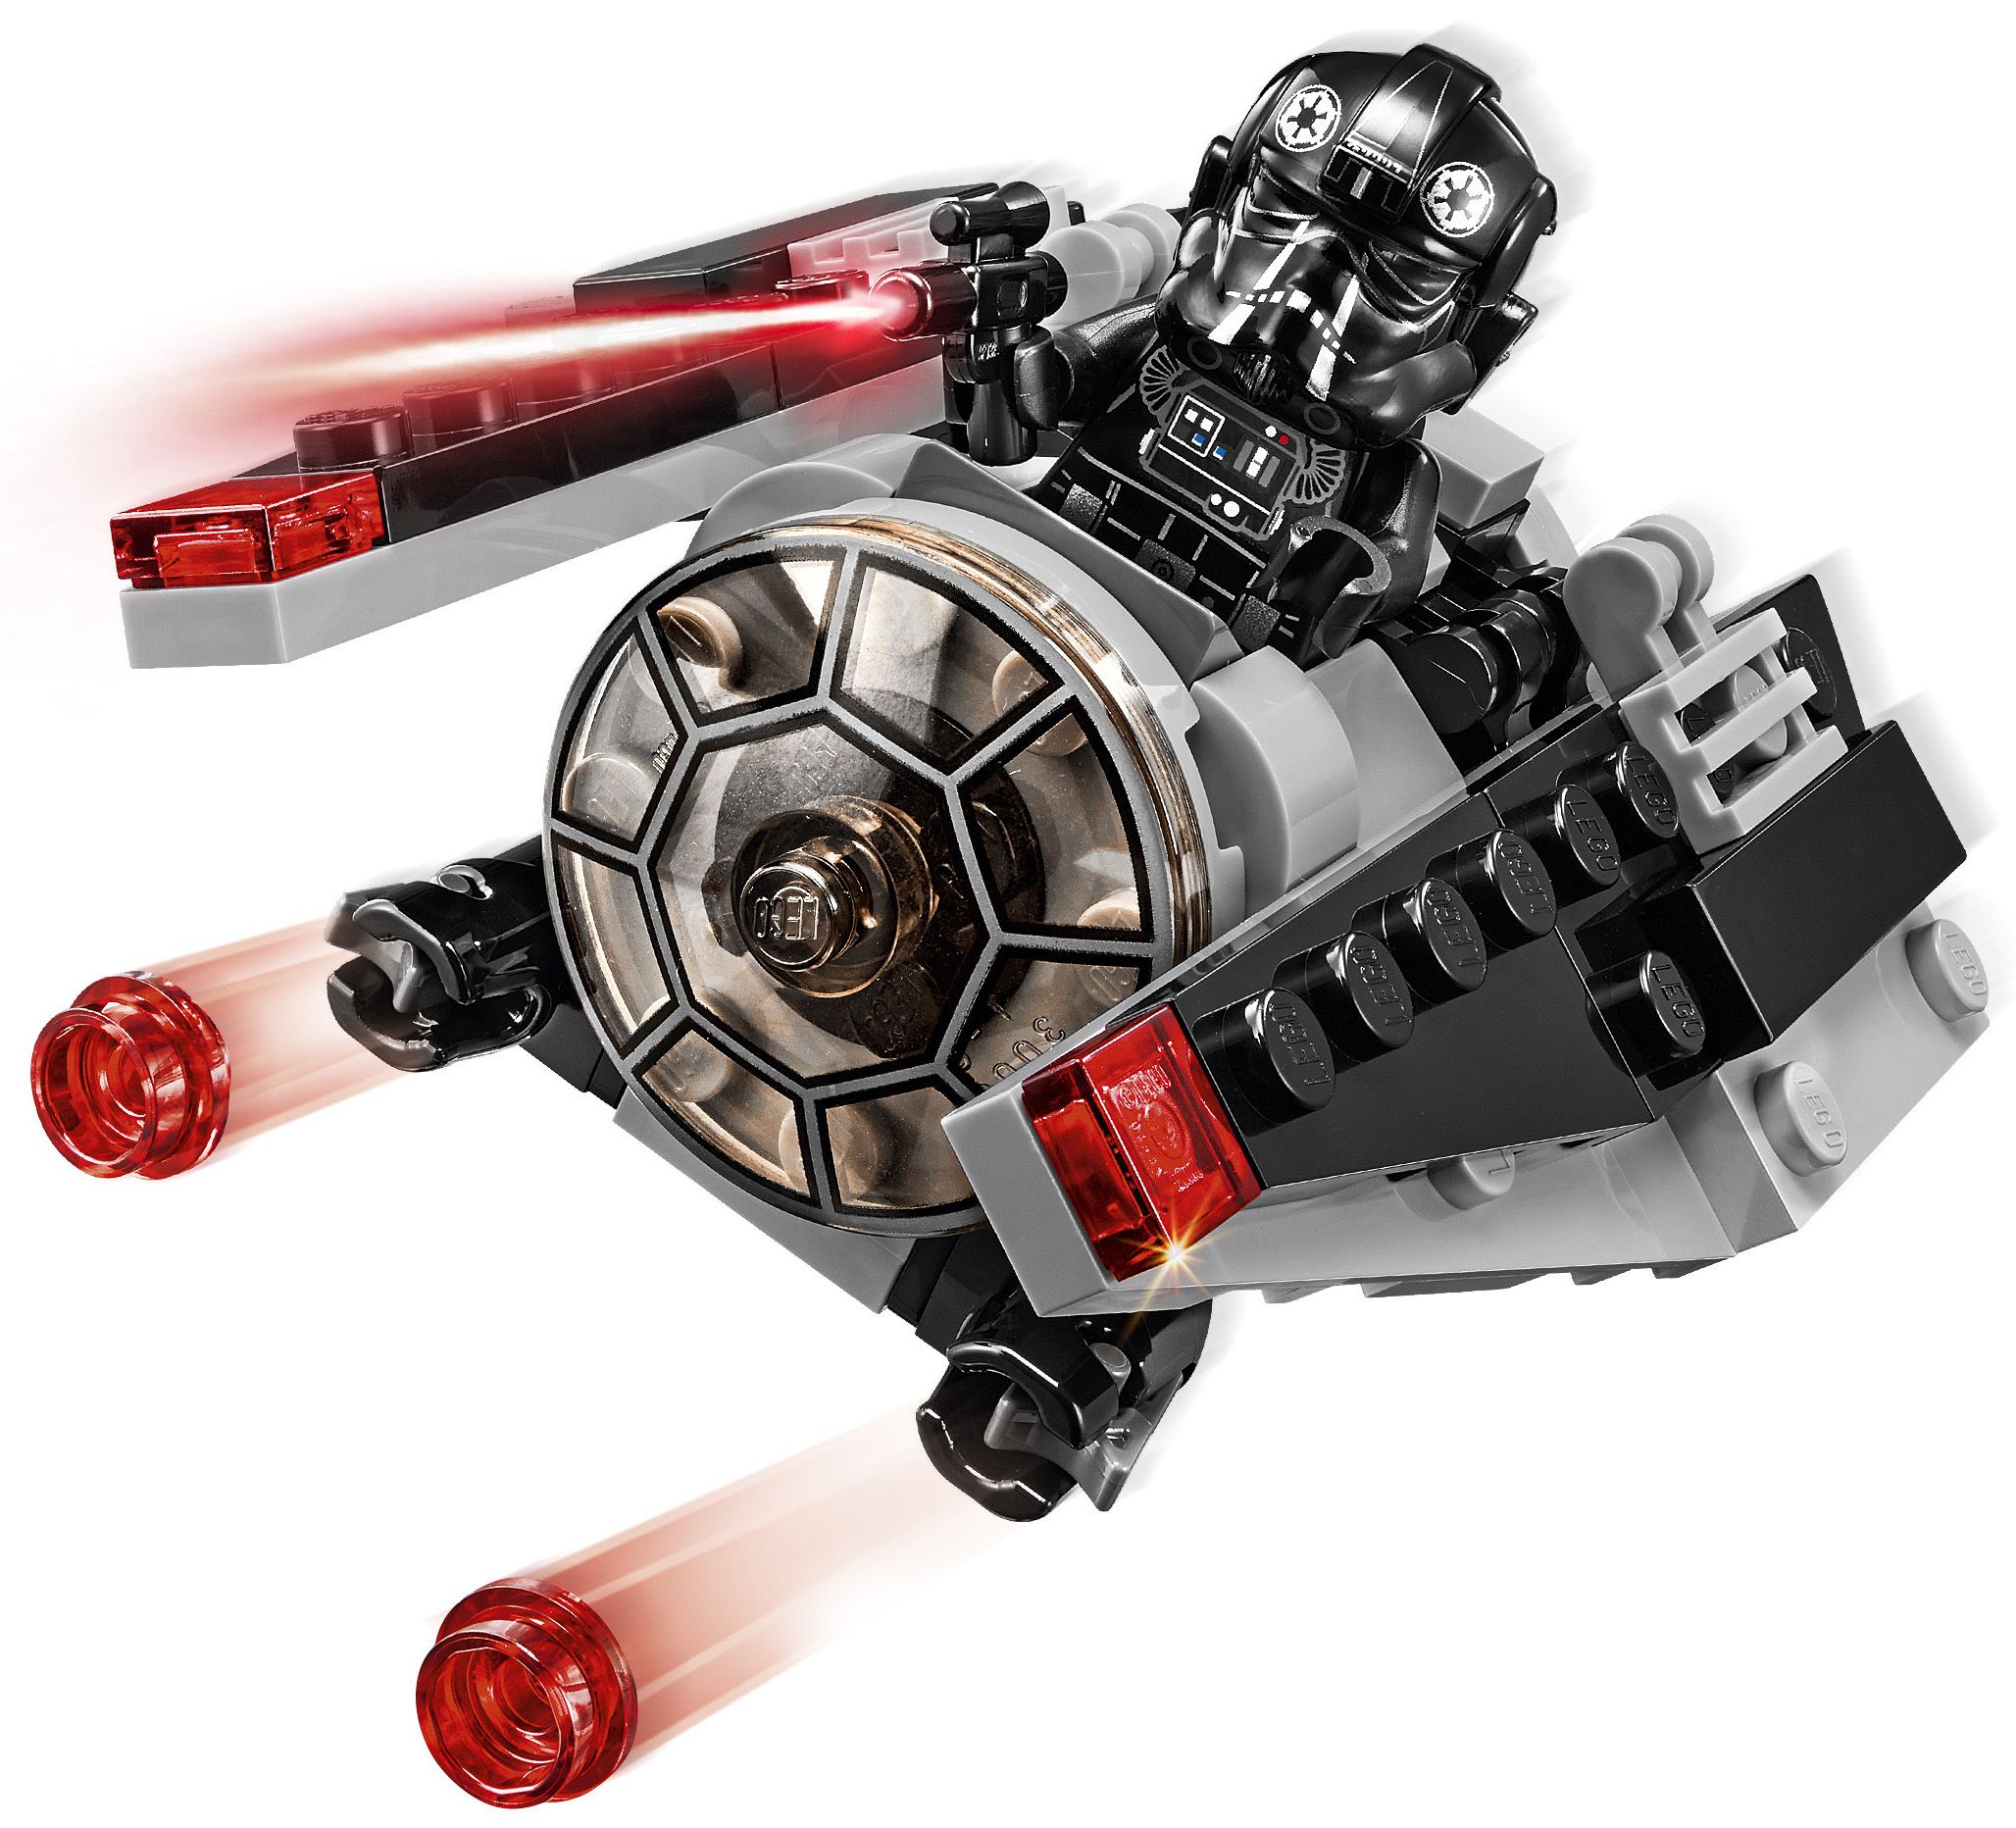 LEGO Star Wars 75160 Microfighters U-Wing